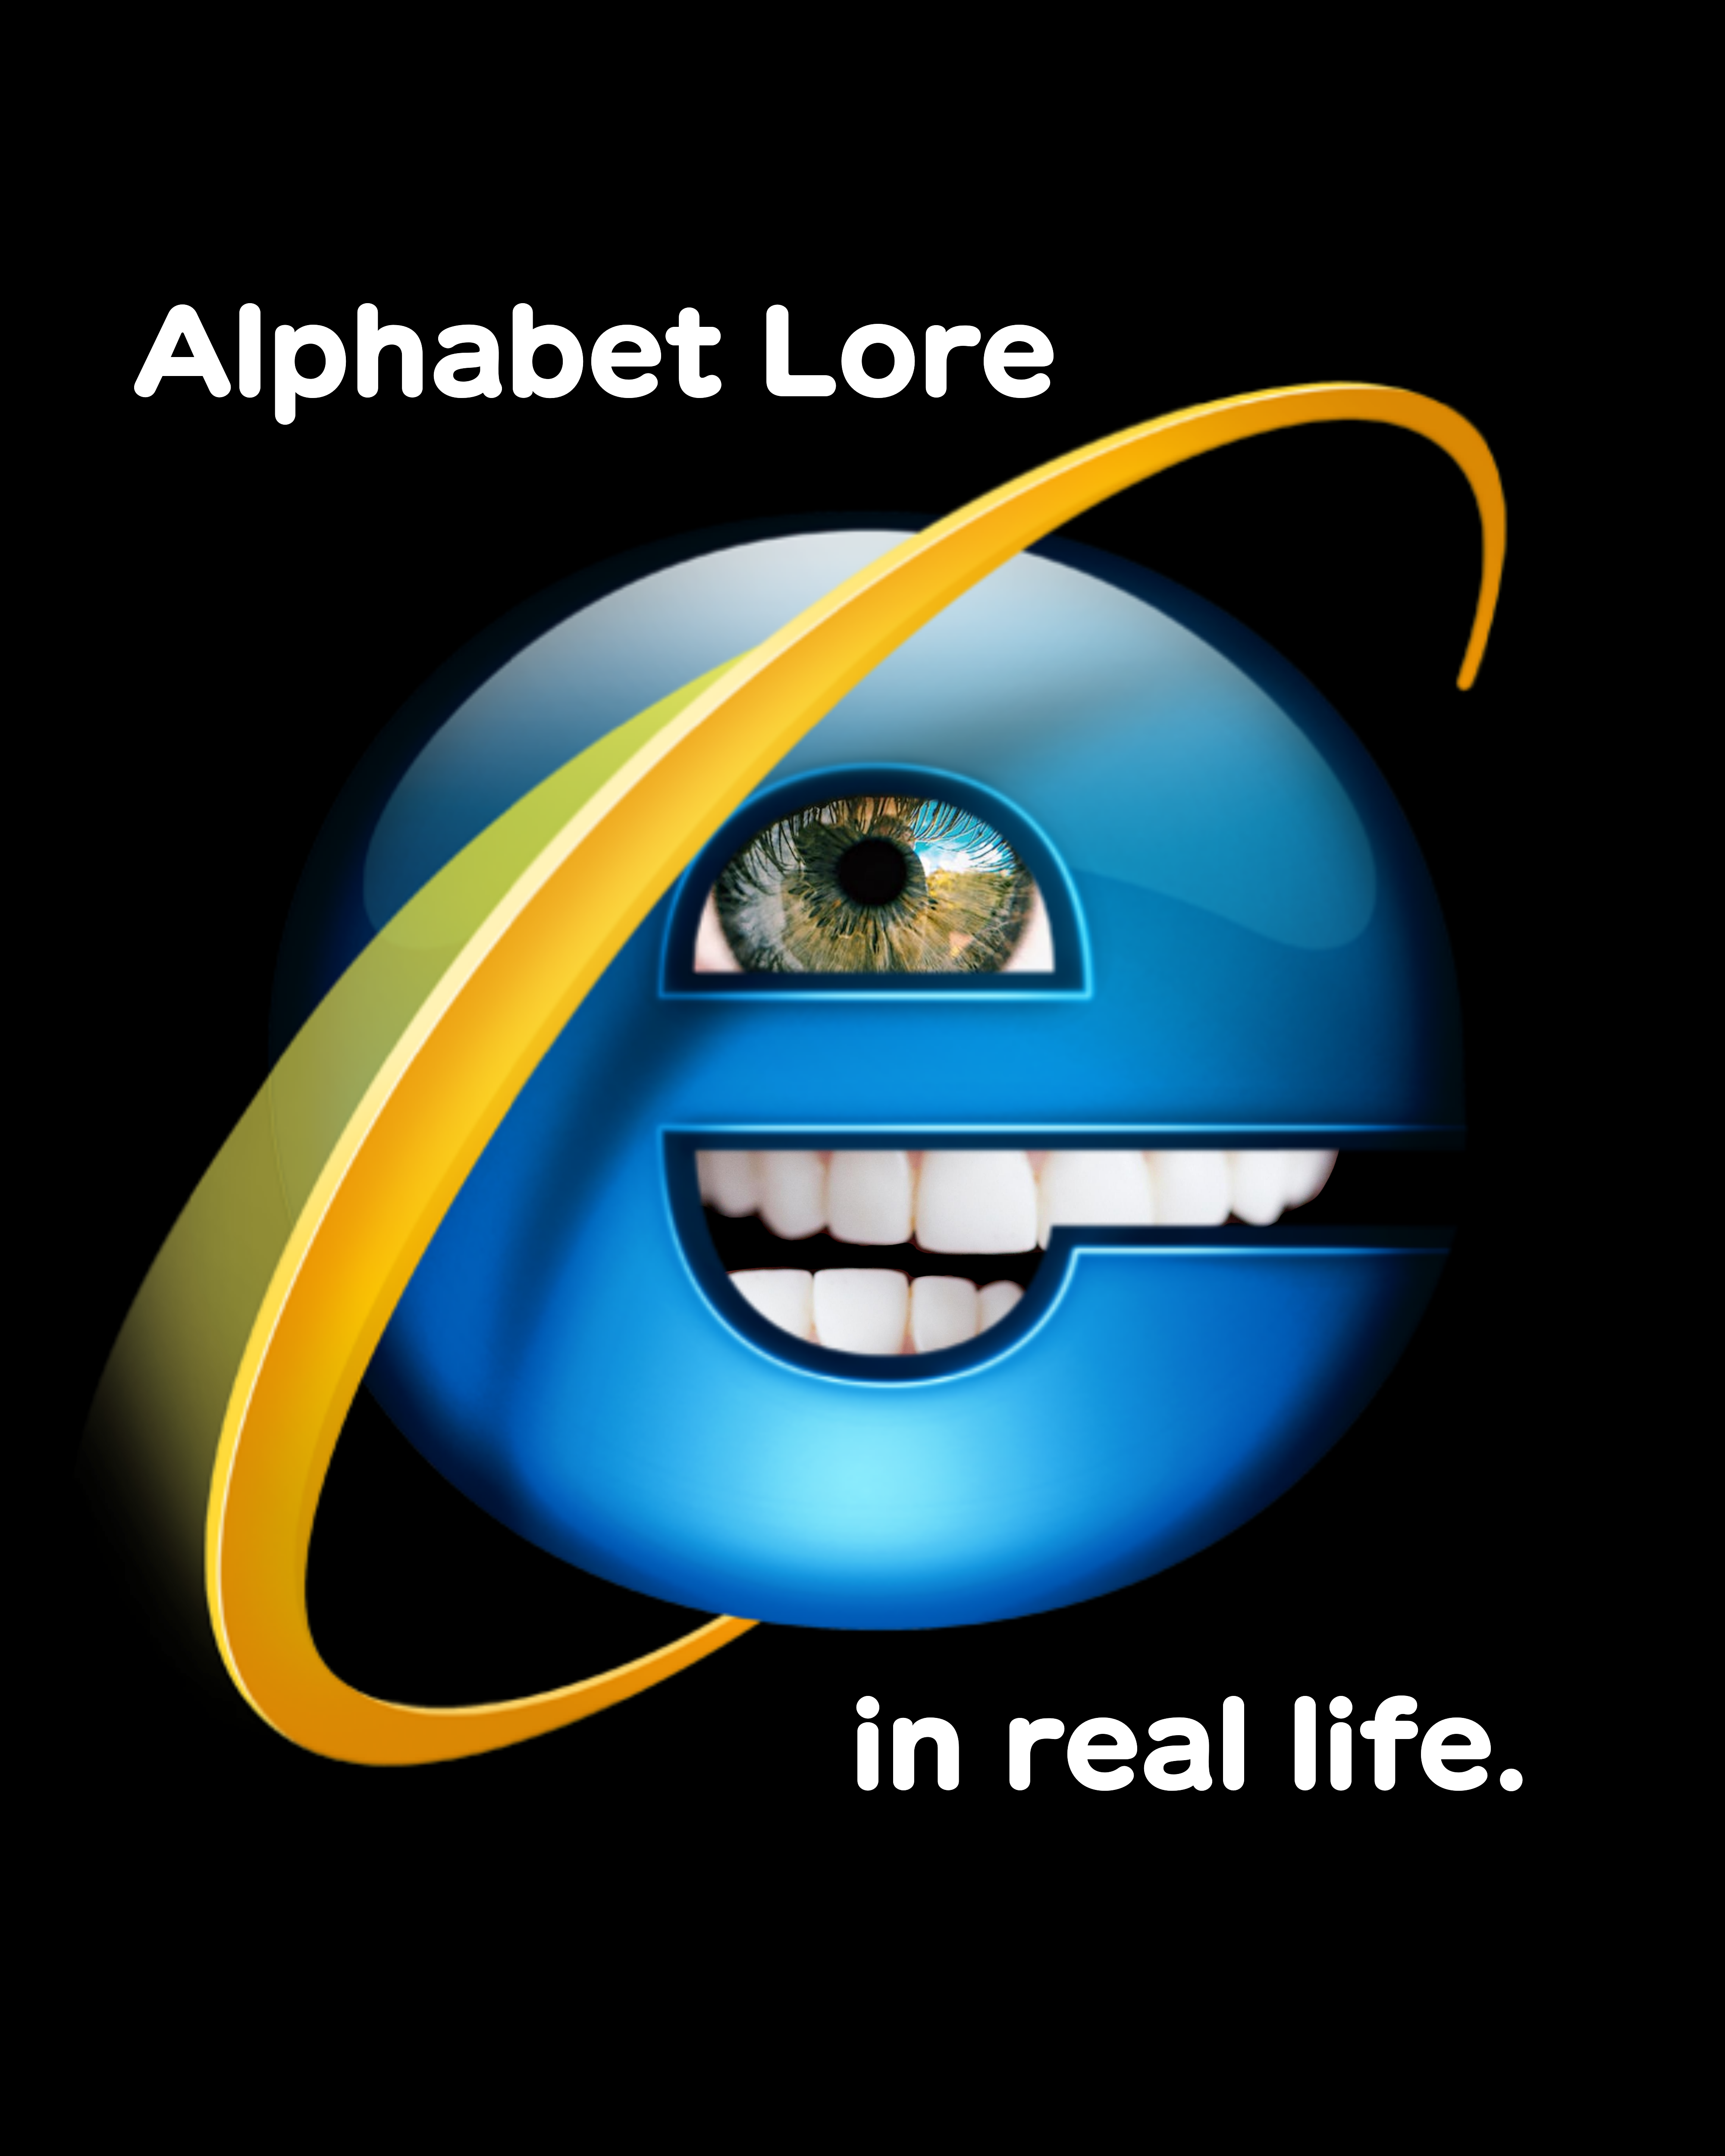 Undertale alphabet lore meme. : r/WaterfallDump